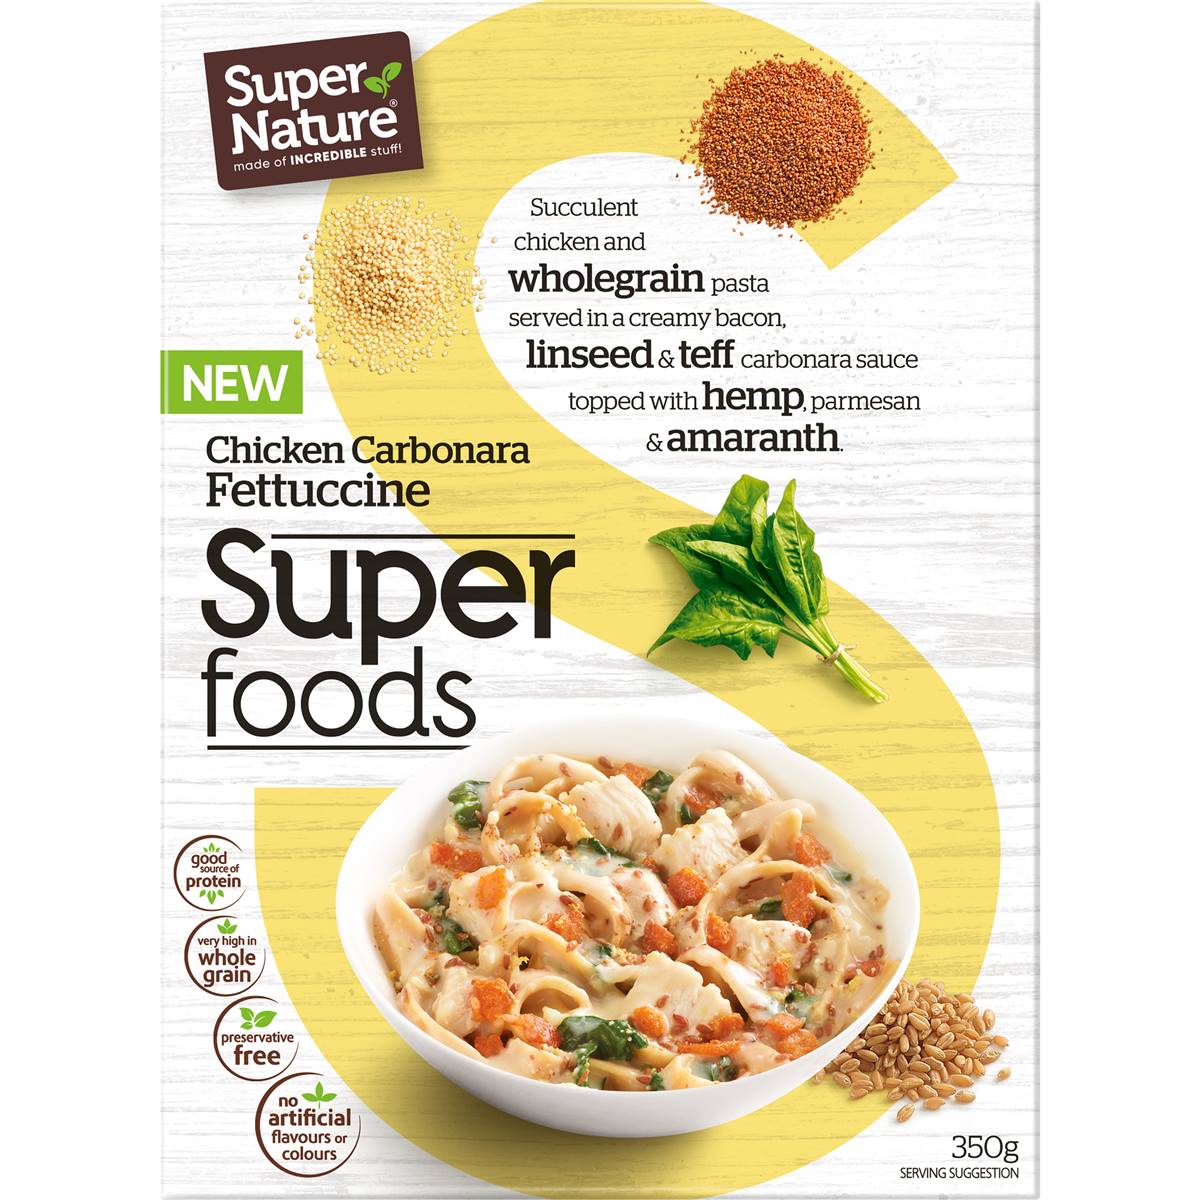 Calories in Super Nature Super Foods Carbonara Chicken Fettuccine Frozen Meal